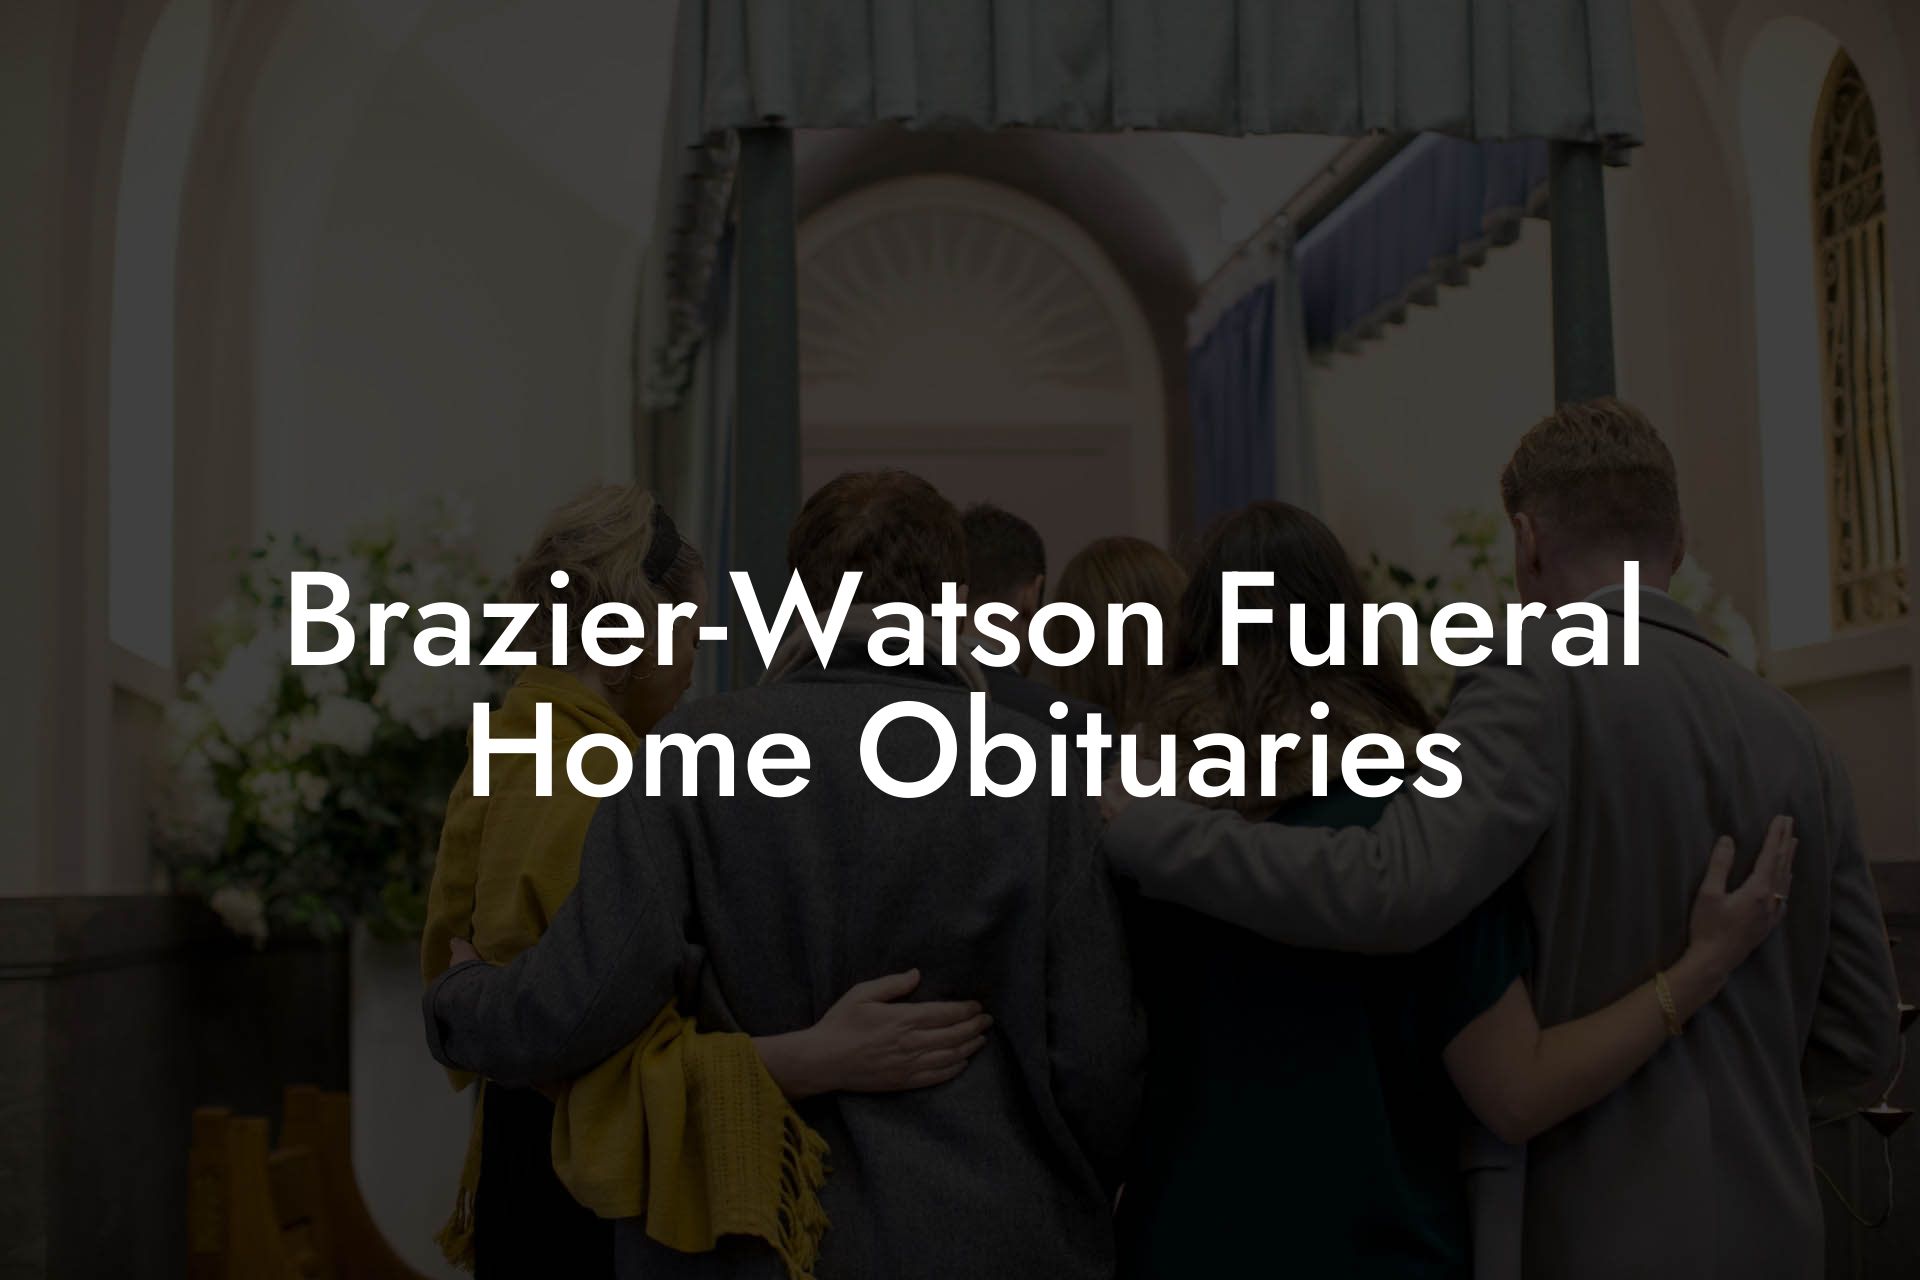 Brazier-Watson Funeral Home Obituaries